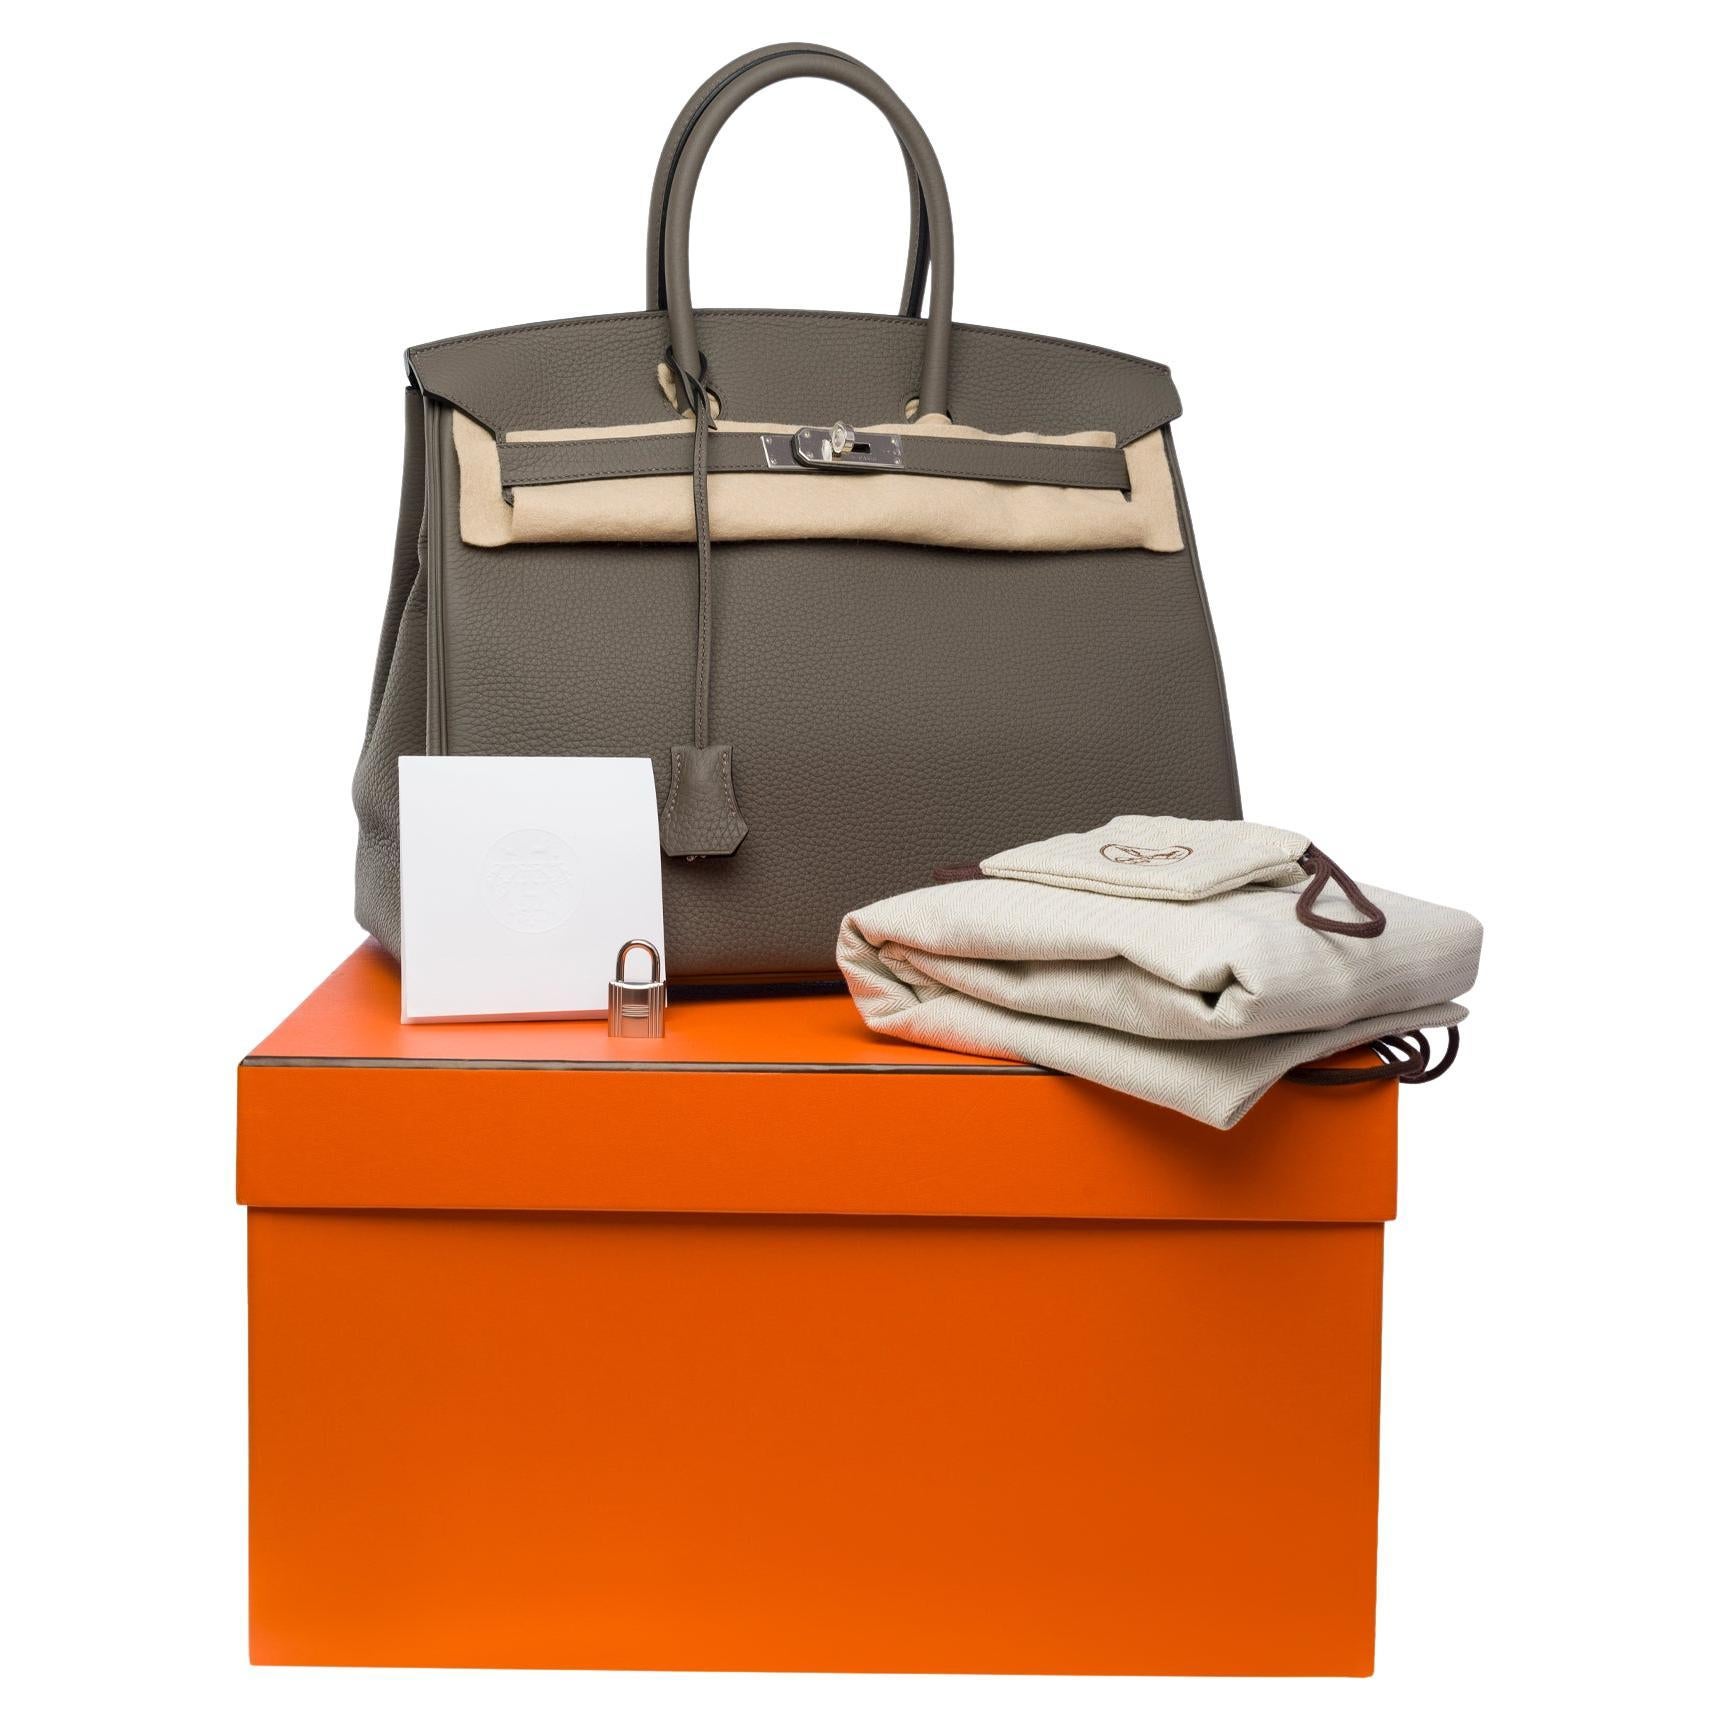 Rare Hermès Birkin 35 HSS (Special Order) handbag in Etain Togo leather, SHW